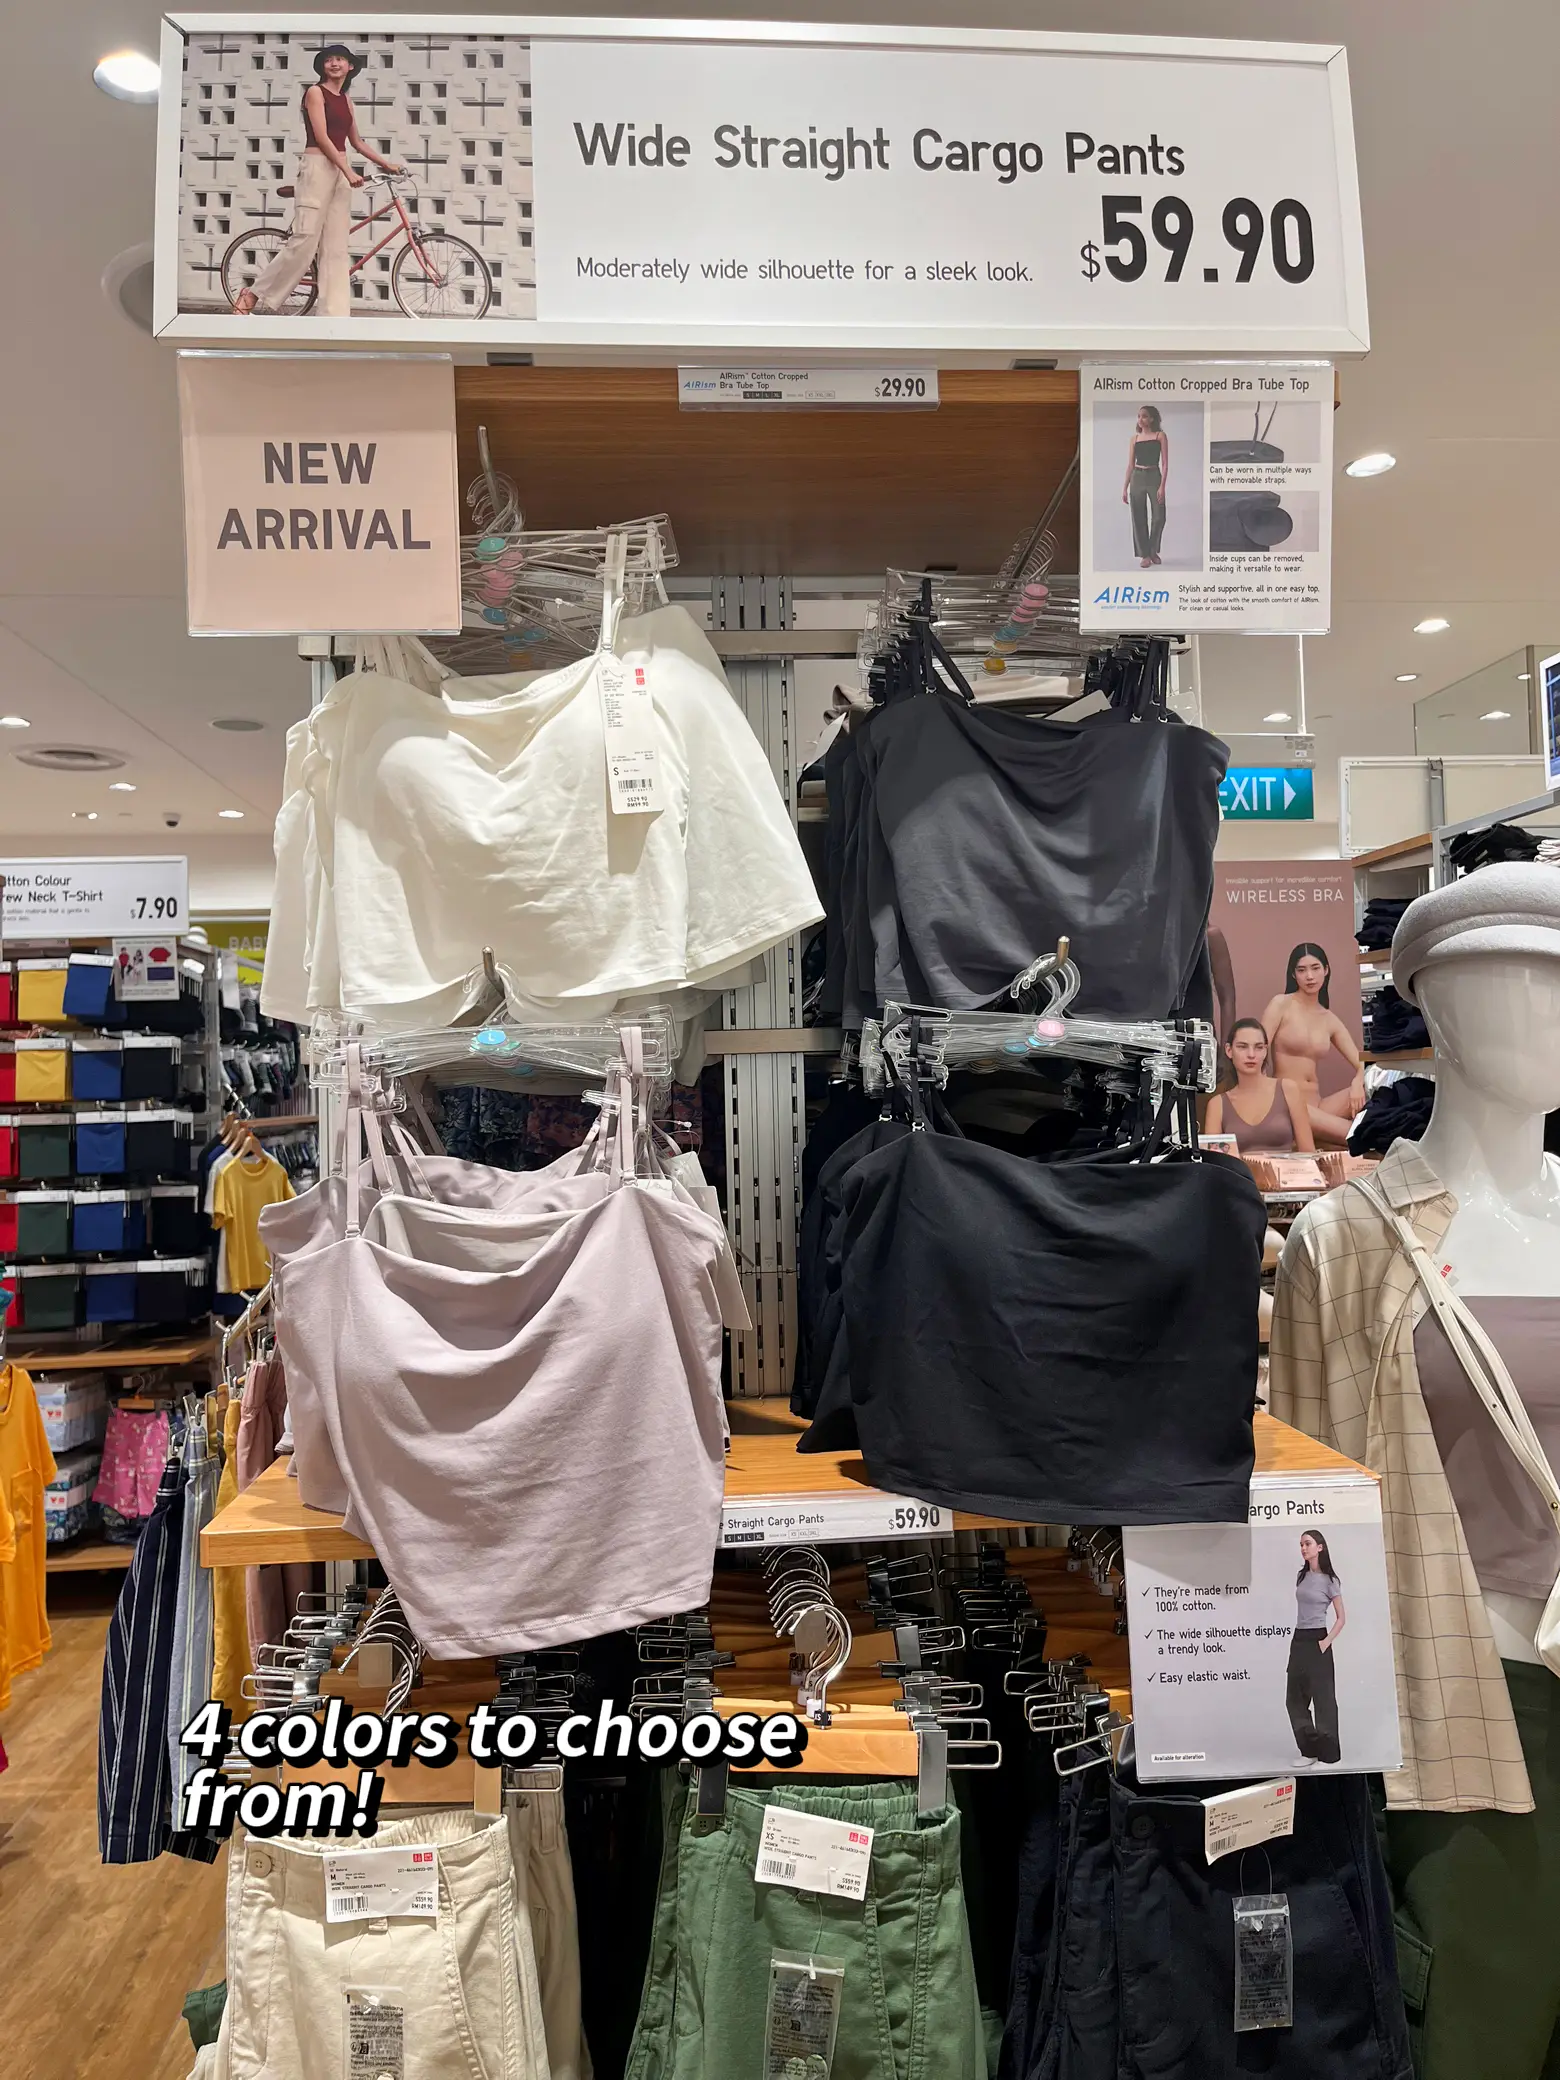 Uniqlo Singapore - WOMEN HEATTECH Bra Sleeveless Top $19.90 (U.P. $29.90)  Shop now